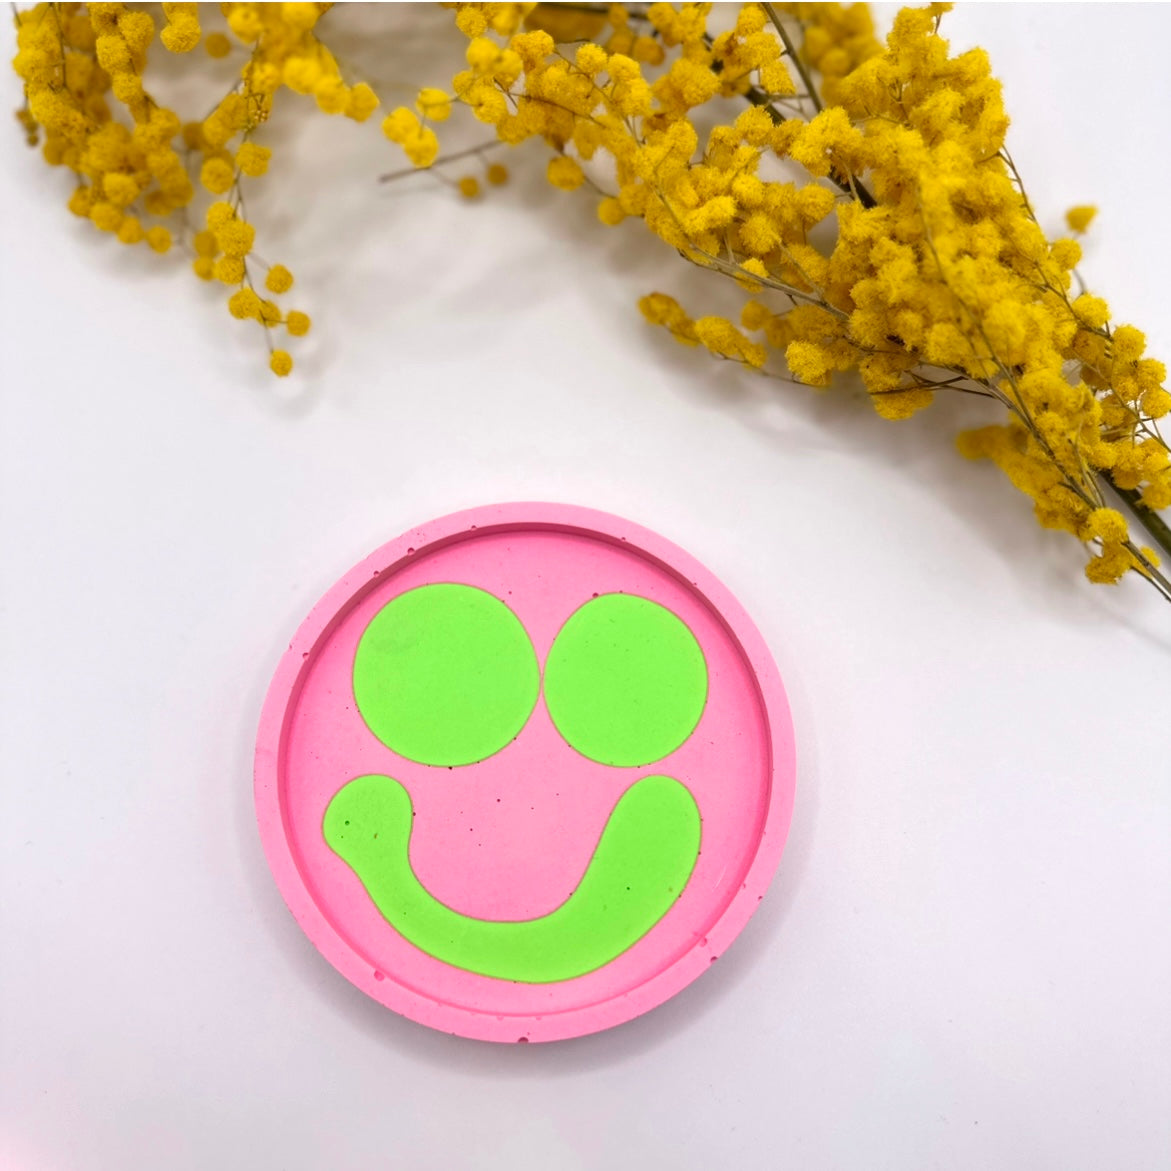 Coaster Set - Smiley - Pink & Green